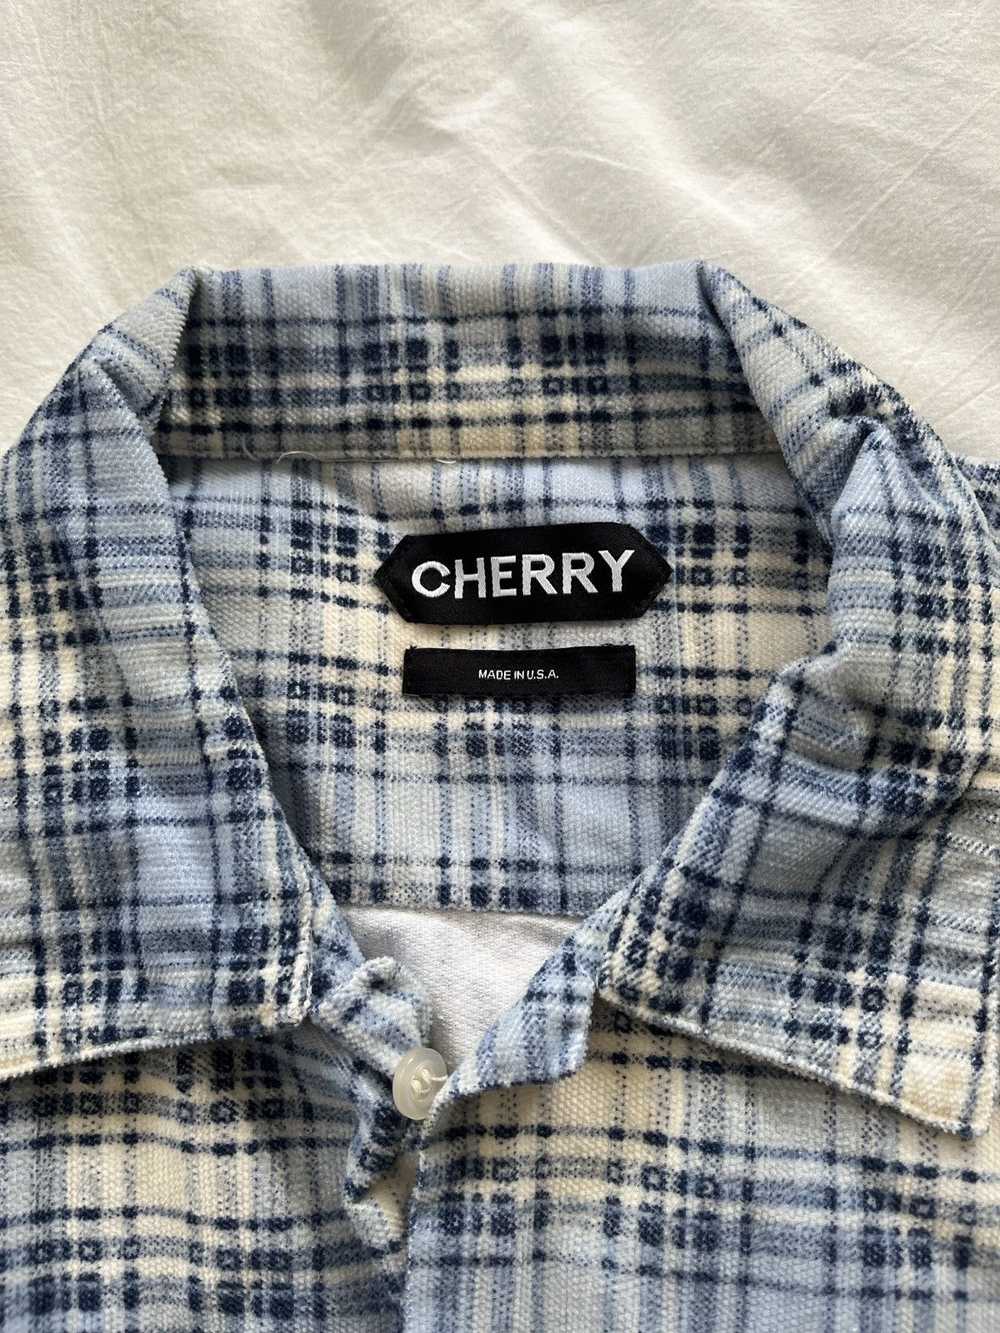 Cherry LA Cherry LA Printed Plaid Flannel - image 3